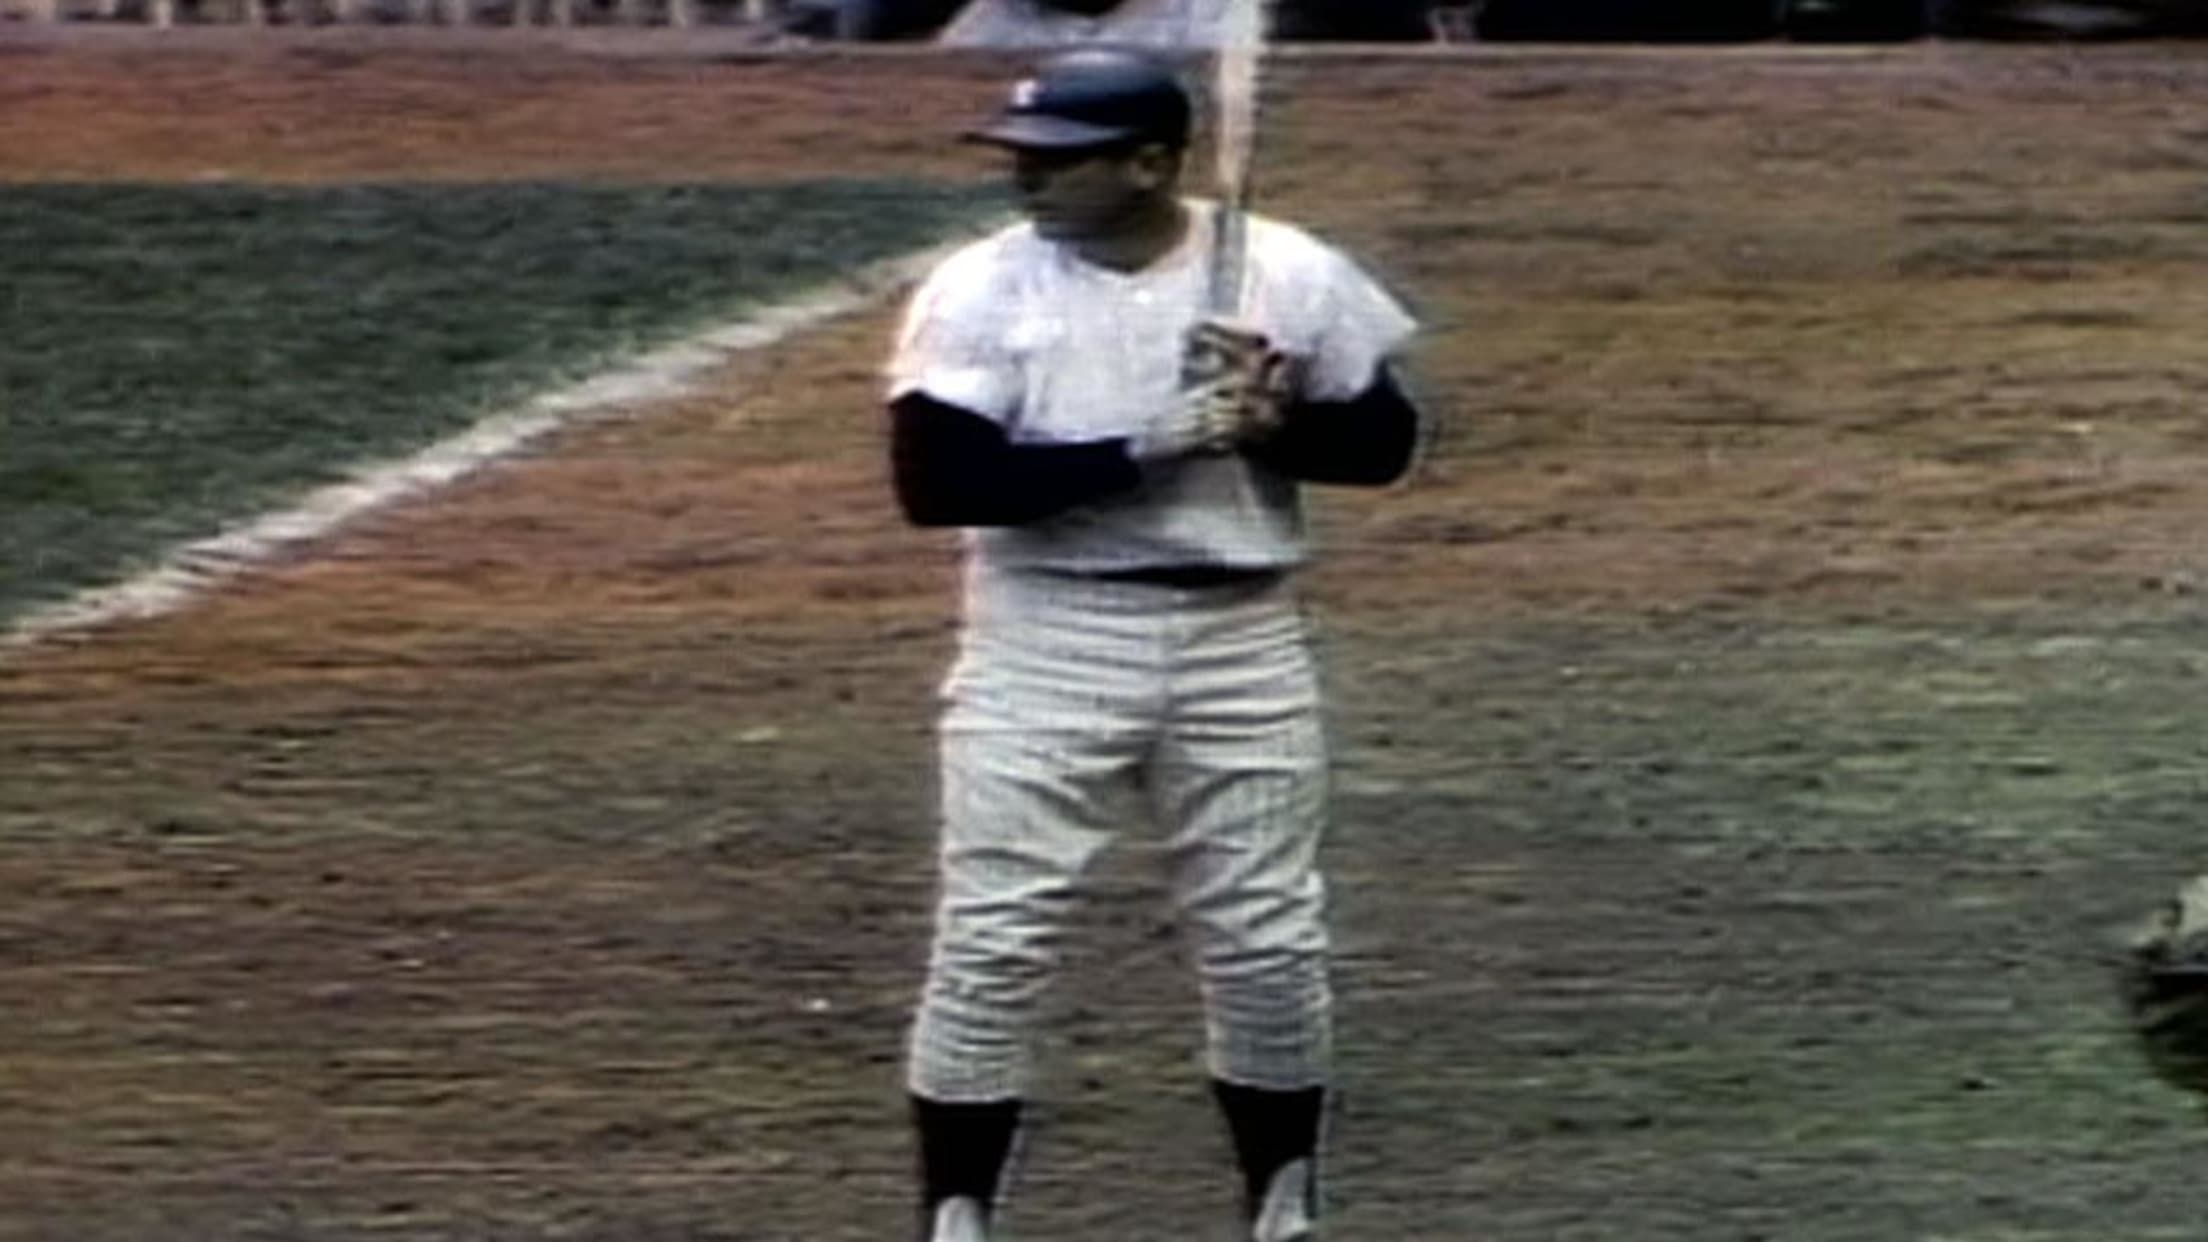 Mantle hits 500th home run | 05/14/1967 | MLB.com